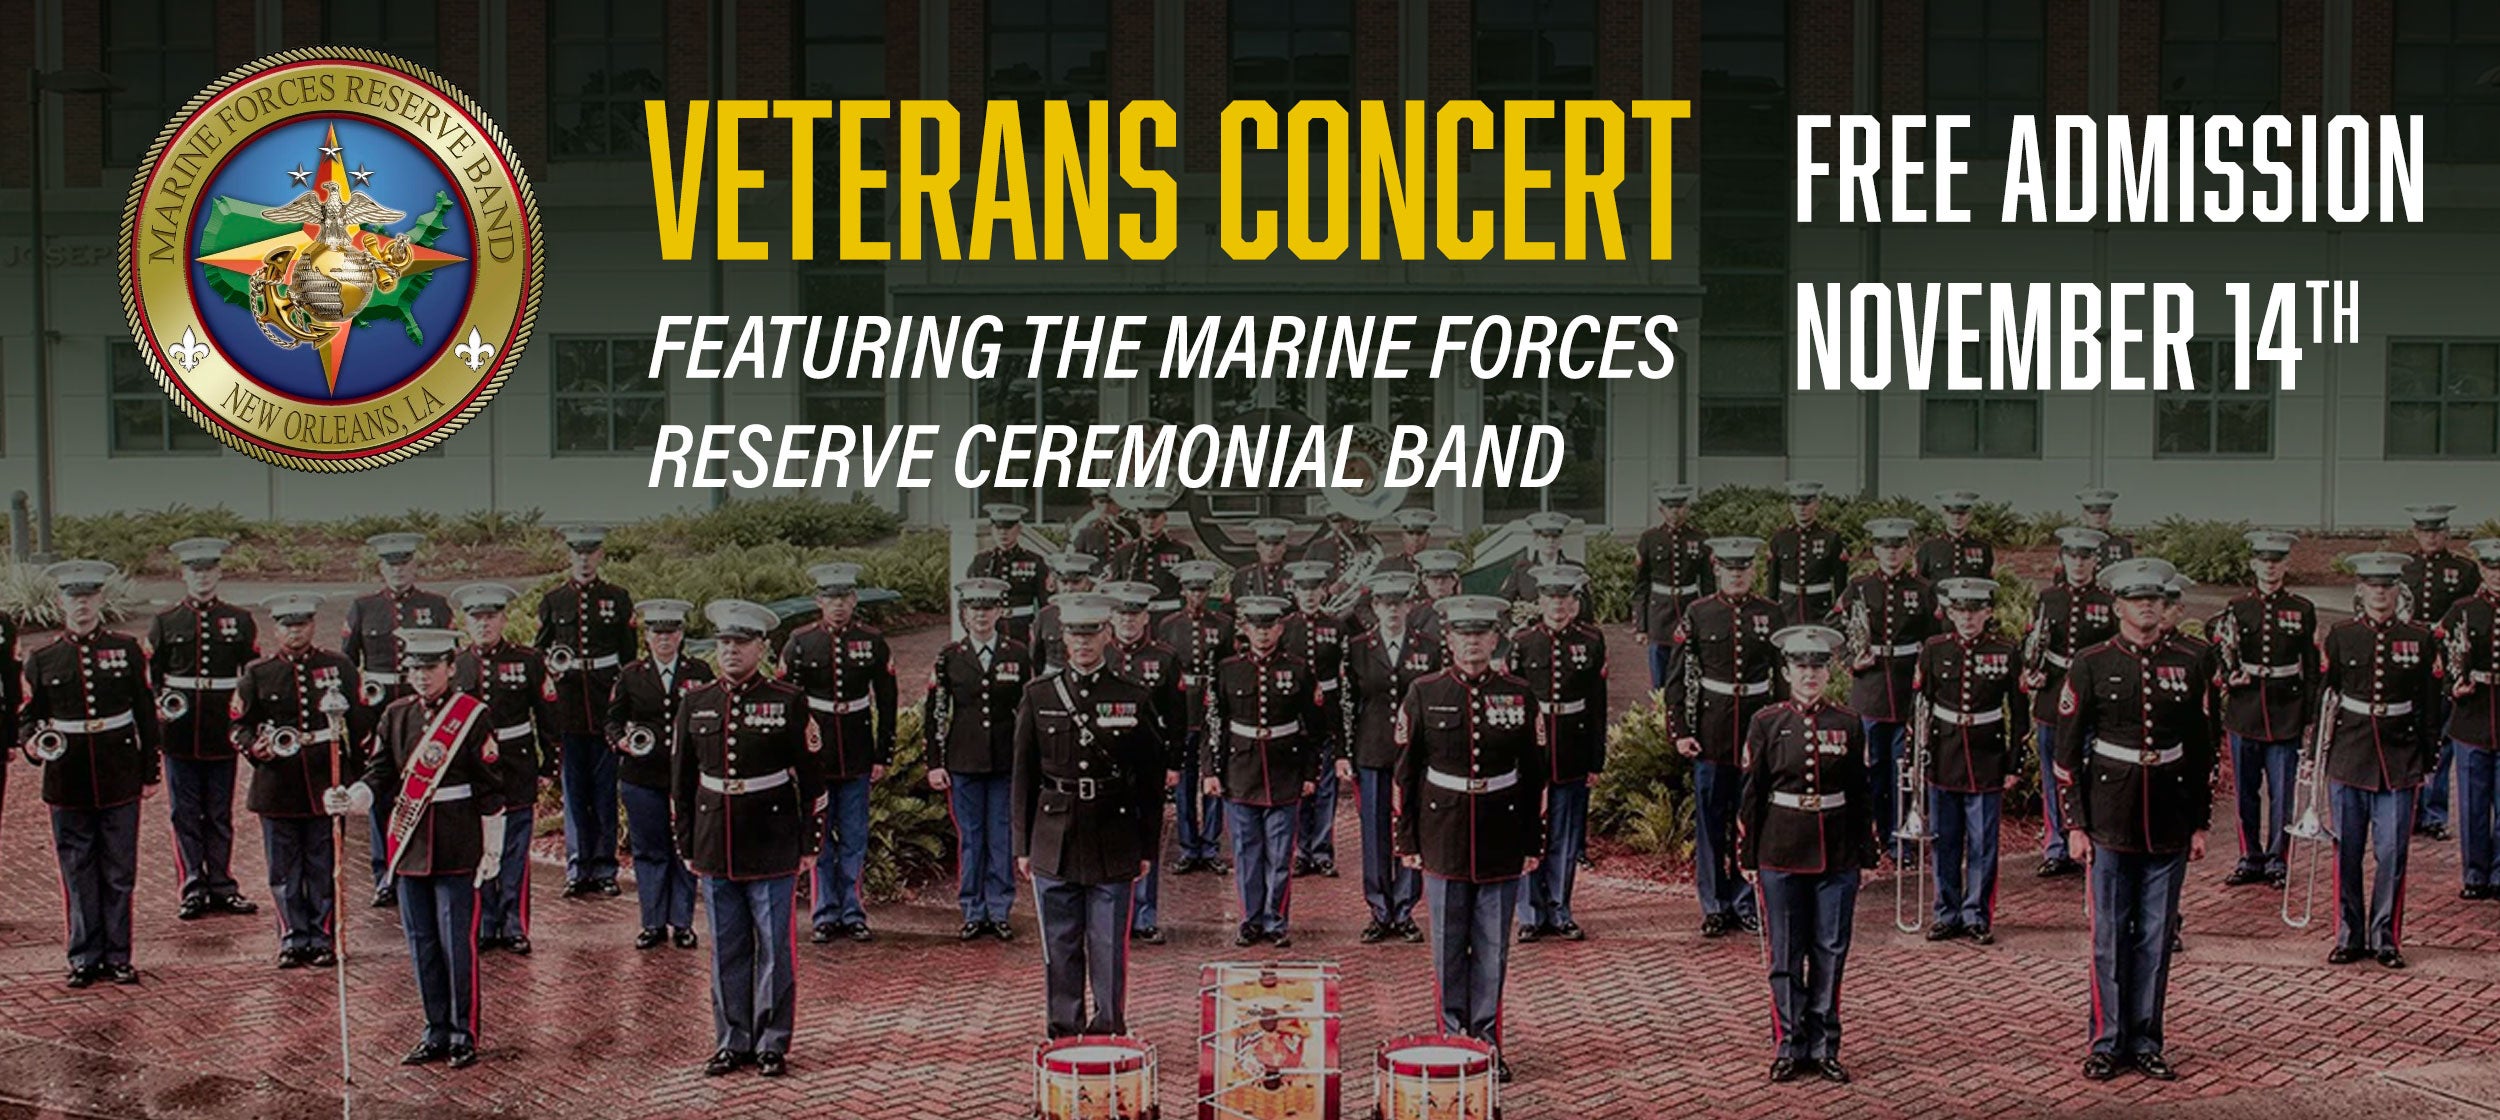 Veterans Concert Jefferson Performing Arts Center